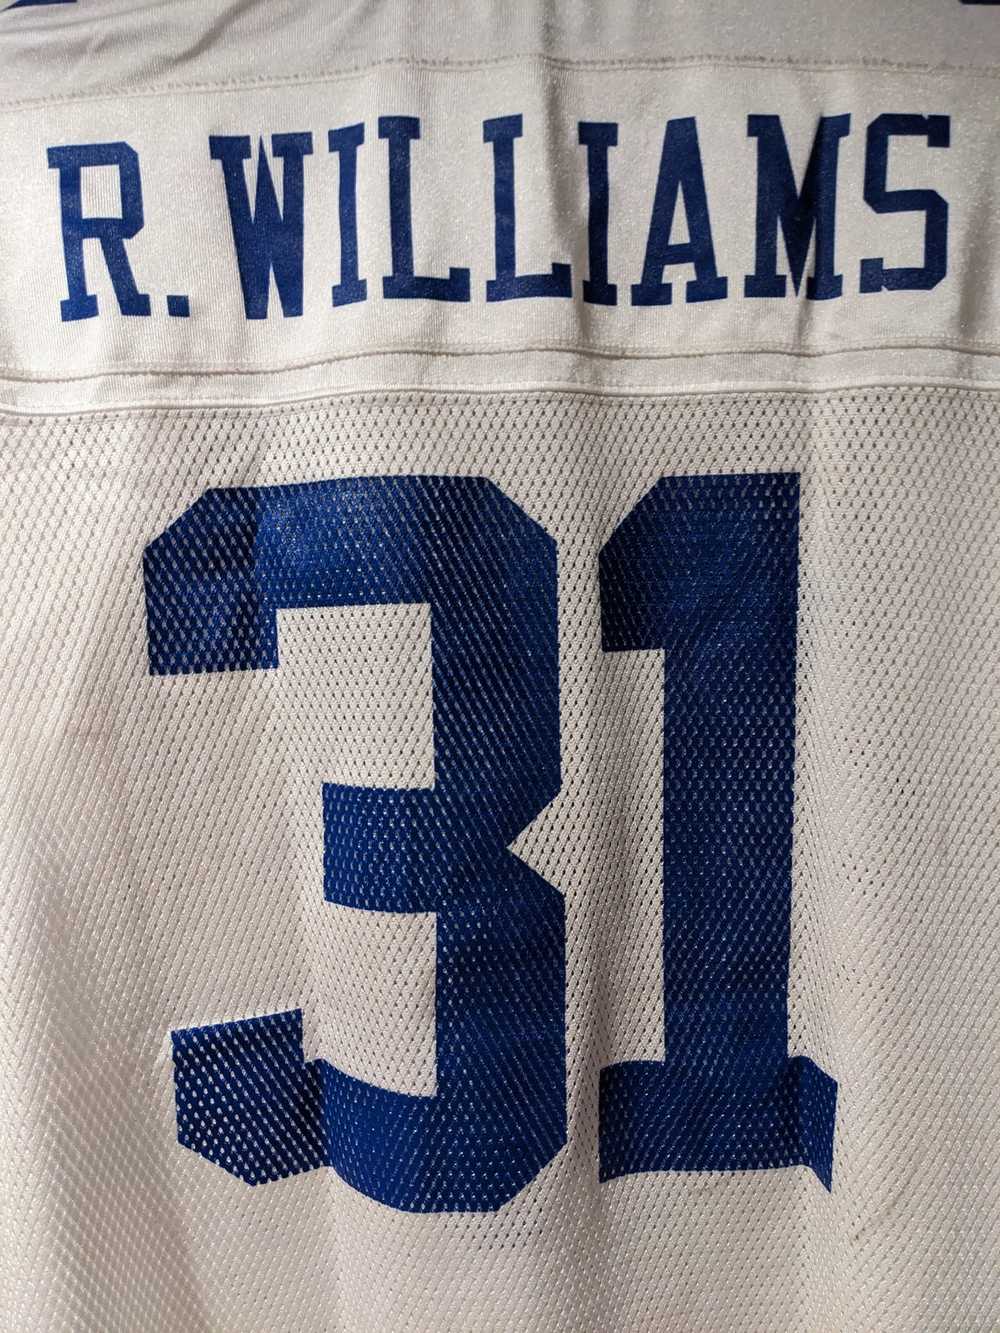 Dallas COWBOYS Roy Williams Mens L Throwbacks Vintage Collection Jersey  M882